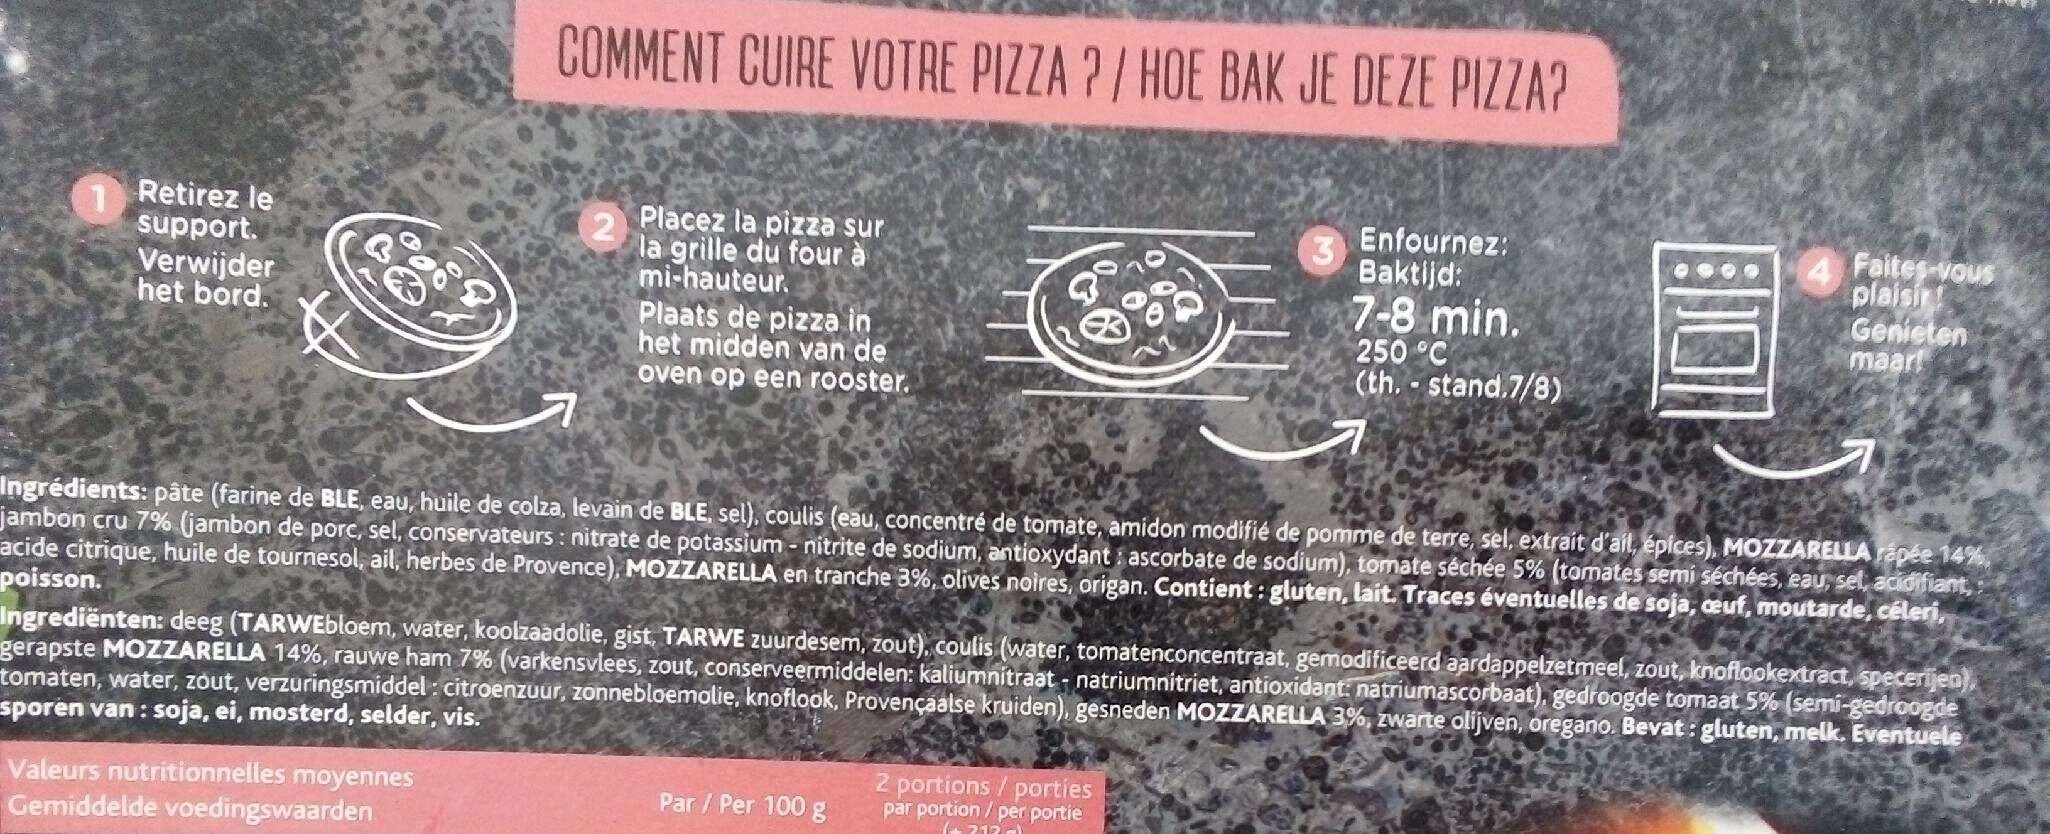 Pizza jambon cru - Ingredients - fr